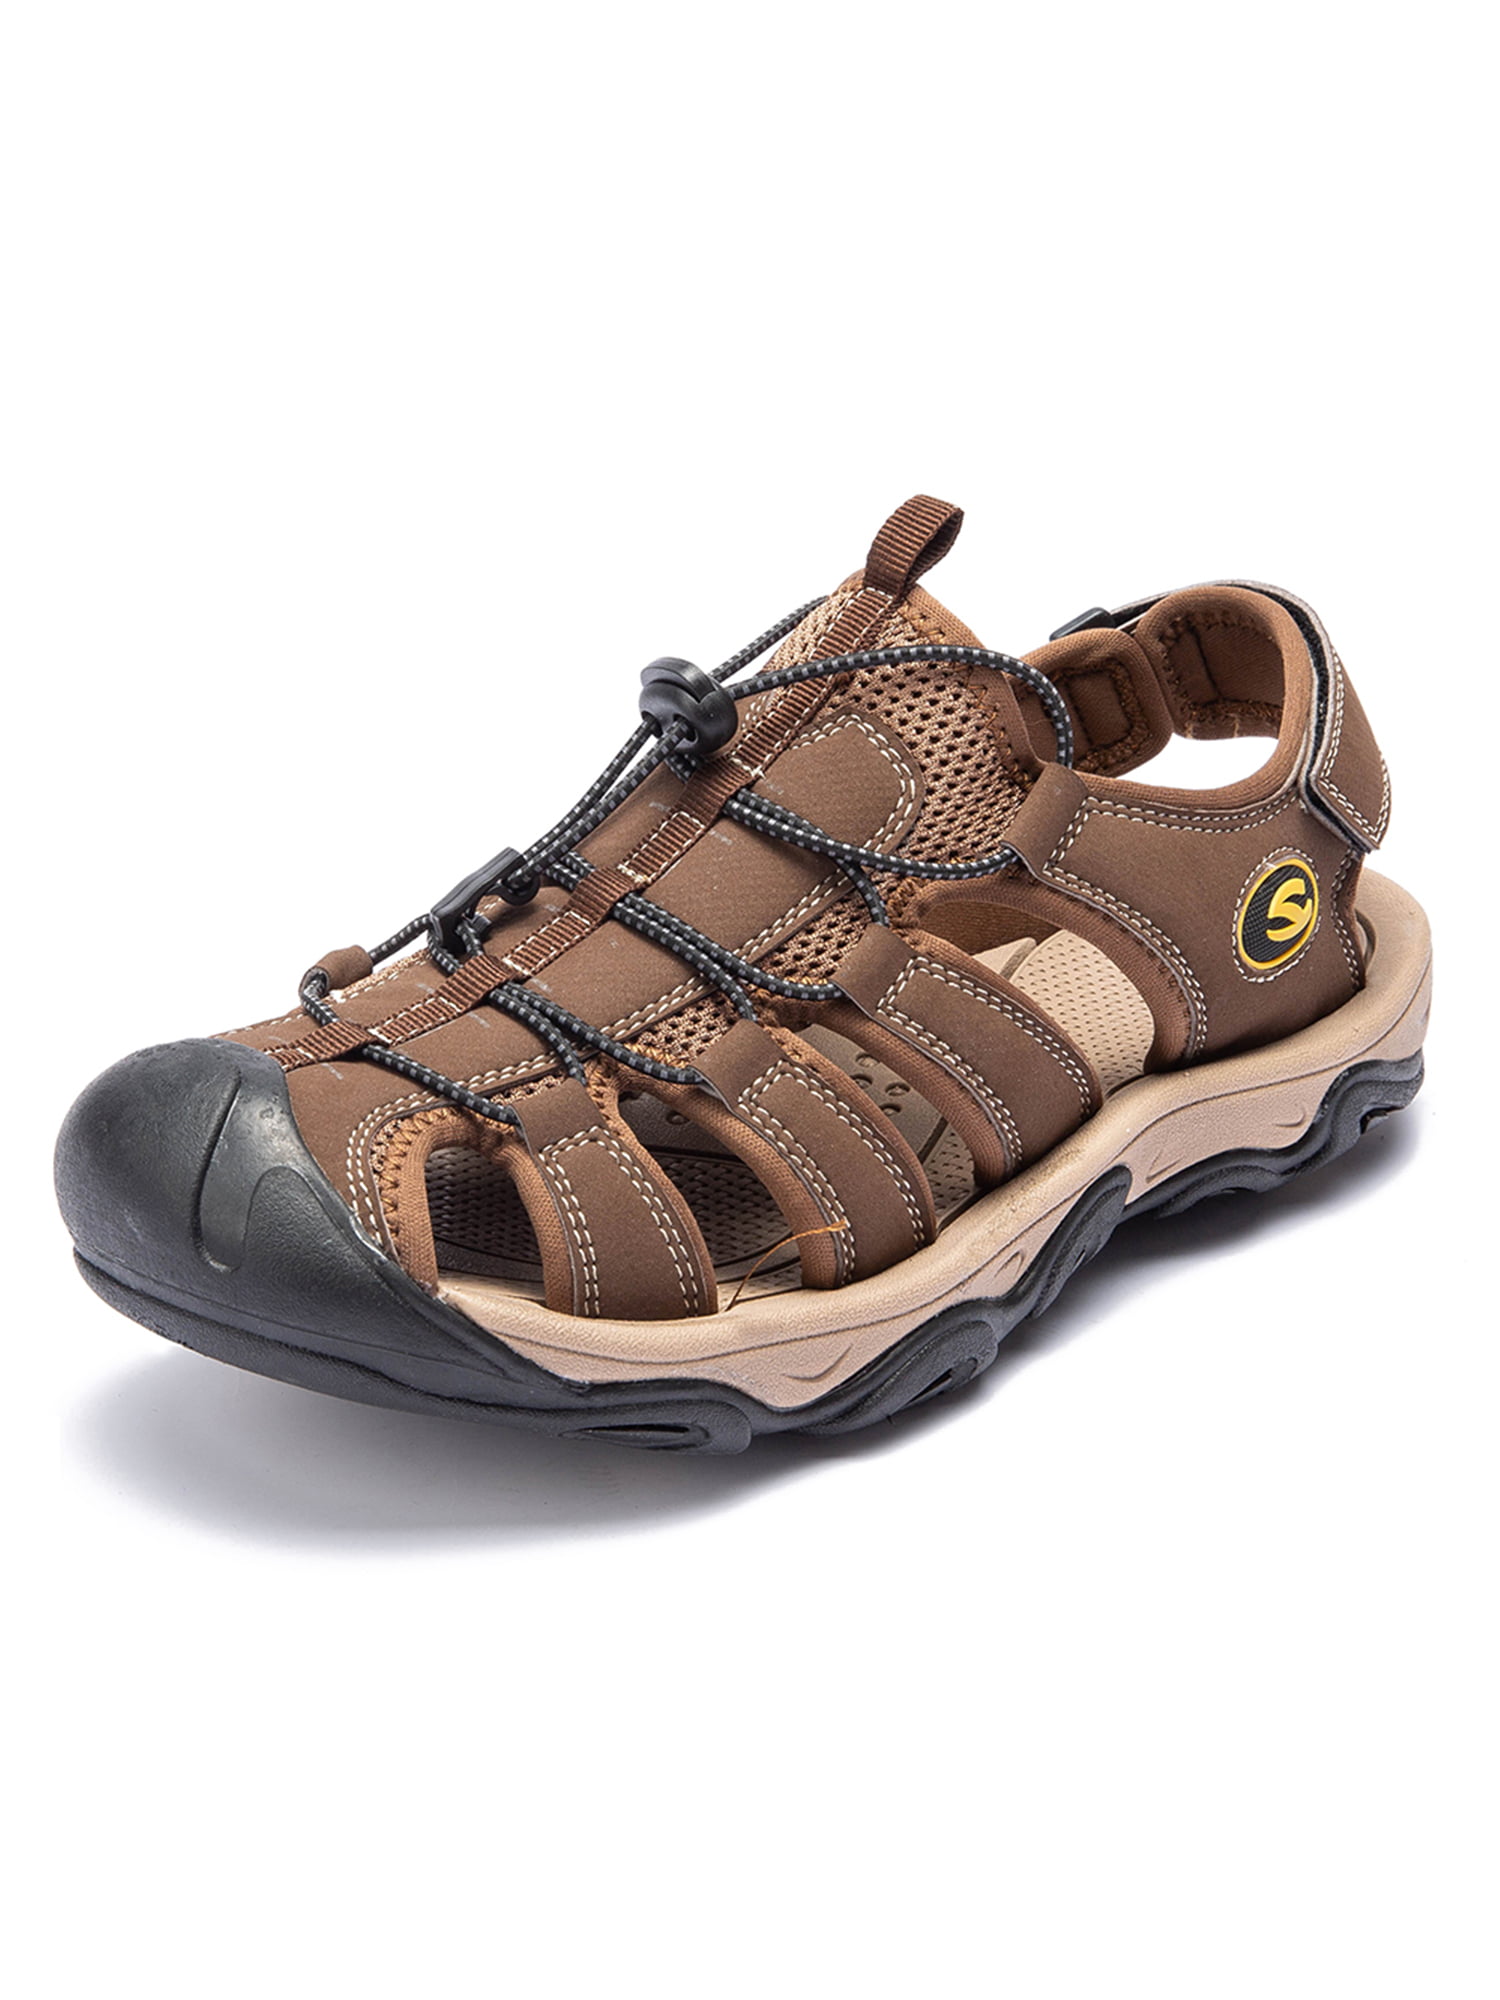 Own Shoe - Men's Sports Sandals Outdoor Athletic Slides Fisherman Beach  Shoes Traveling - Walmart.com - Walmart.com